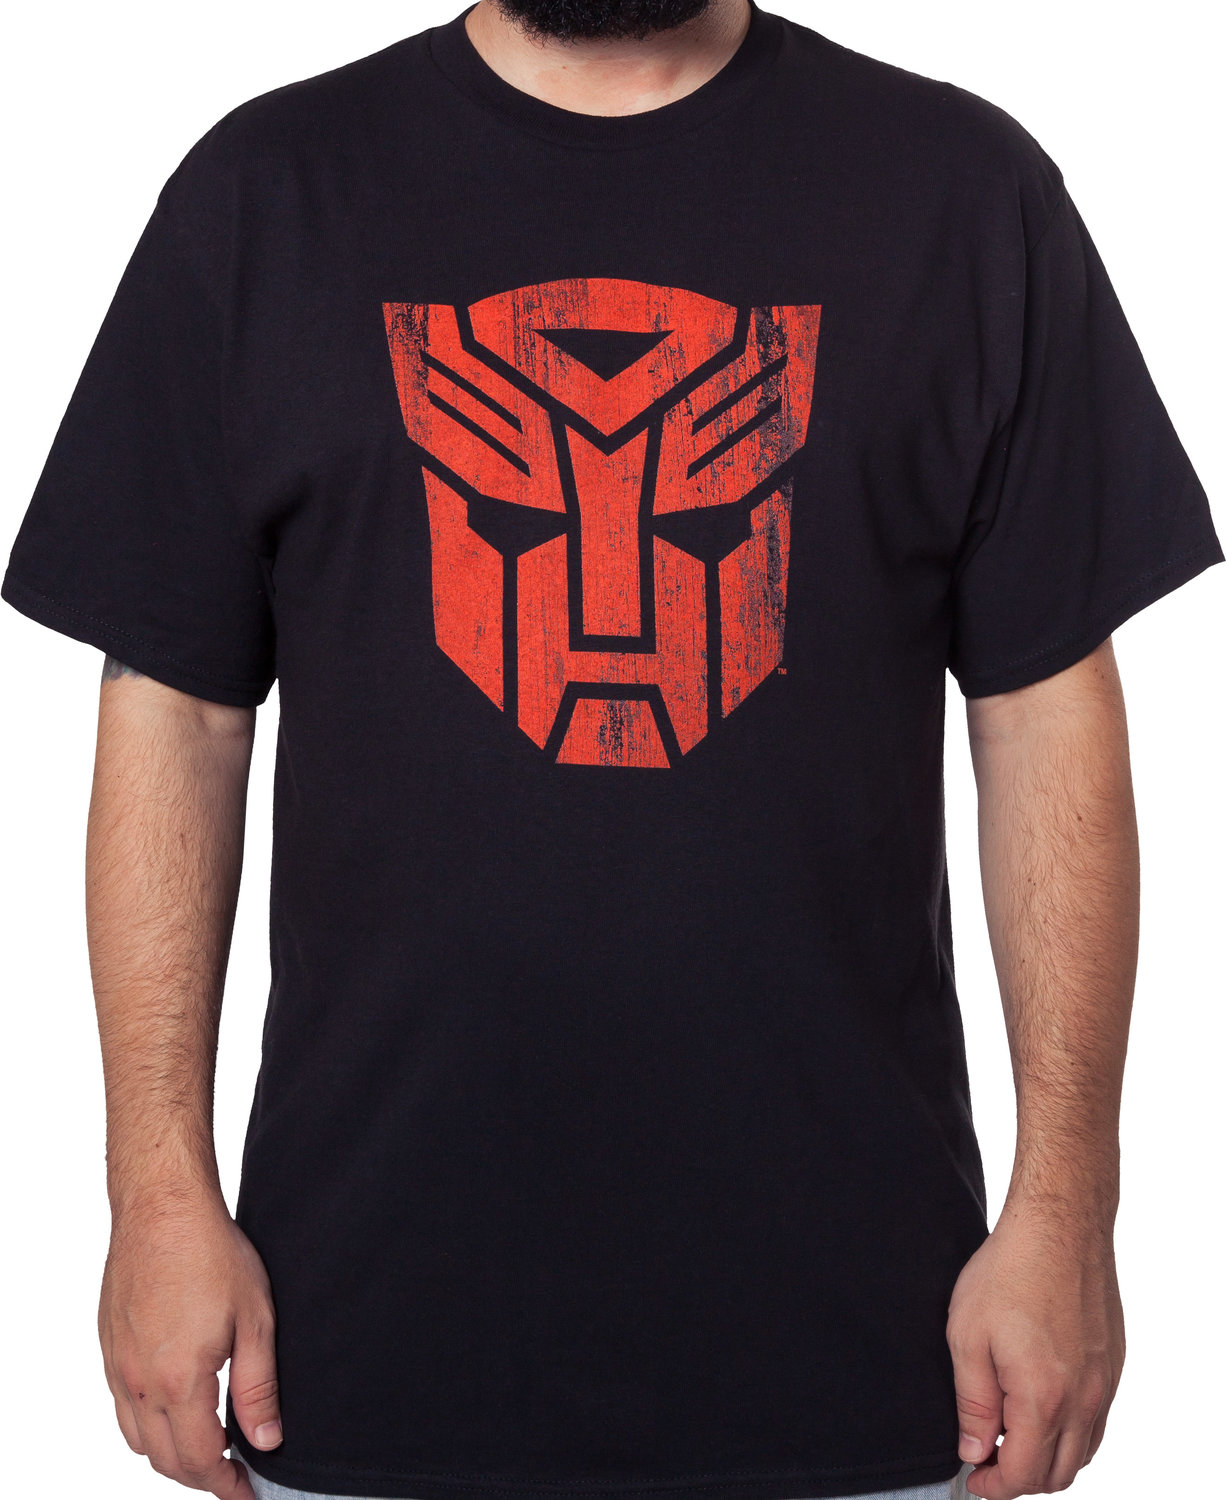 autobot logo t shirt